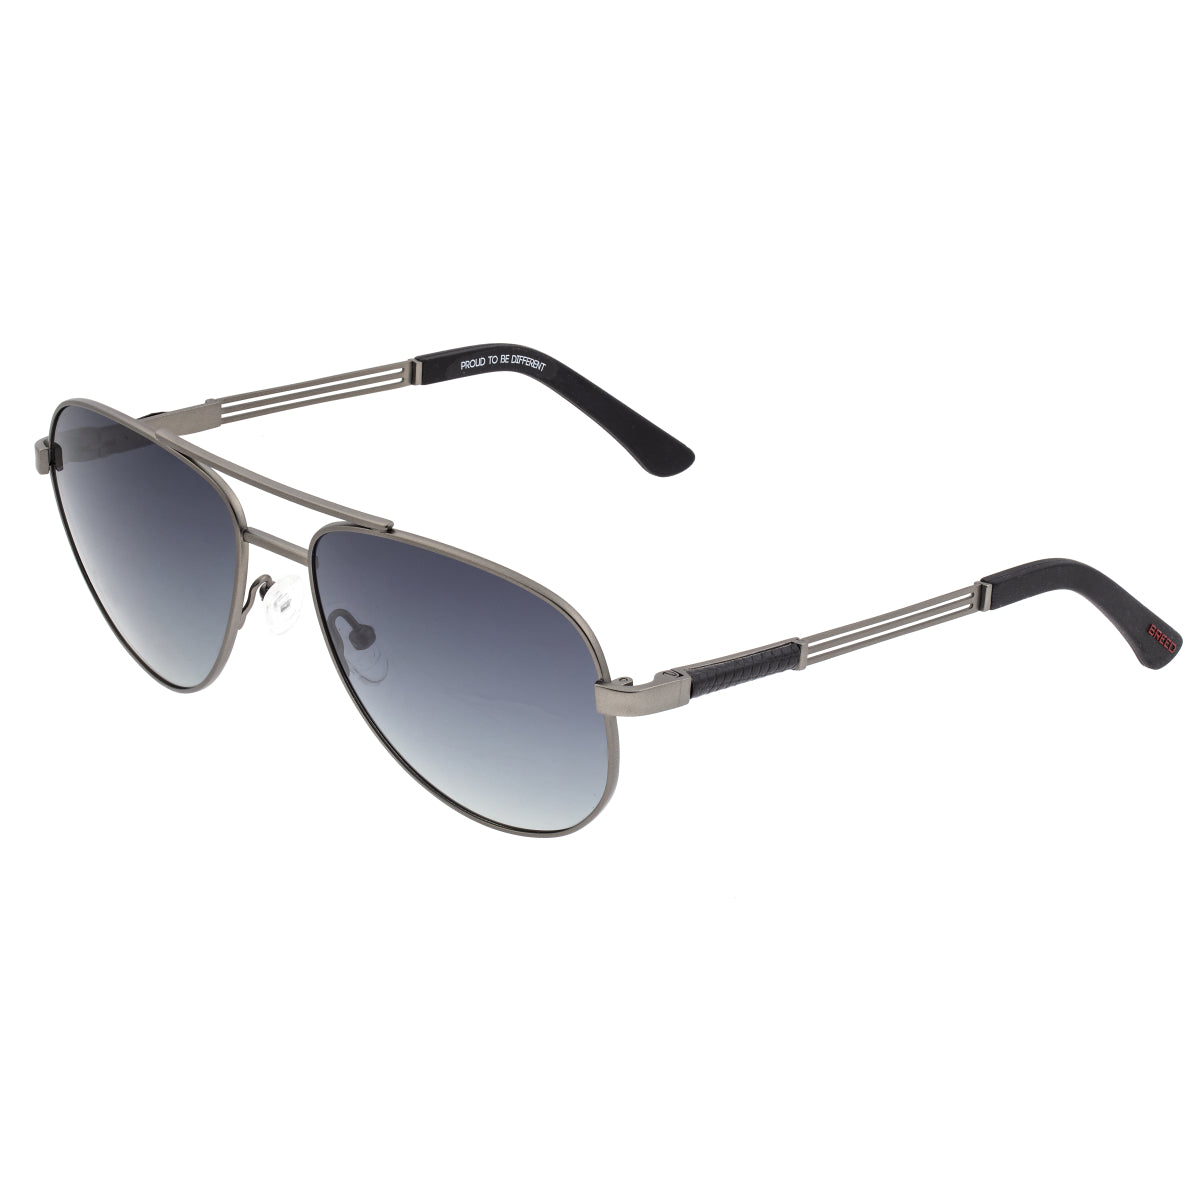 Breed Leo Titanium Polarized Sunglasses - Gunmetal/Black - BSG051GM